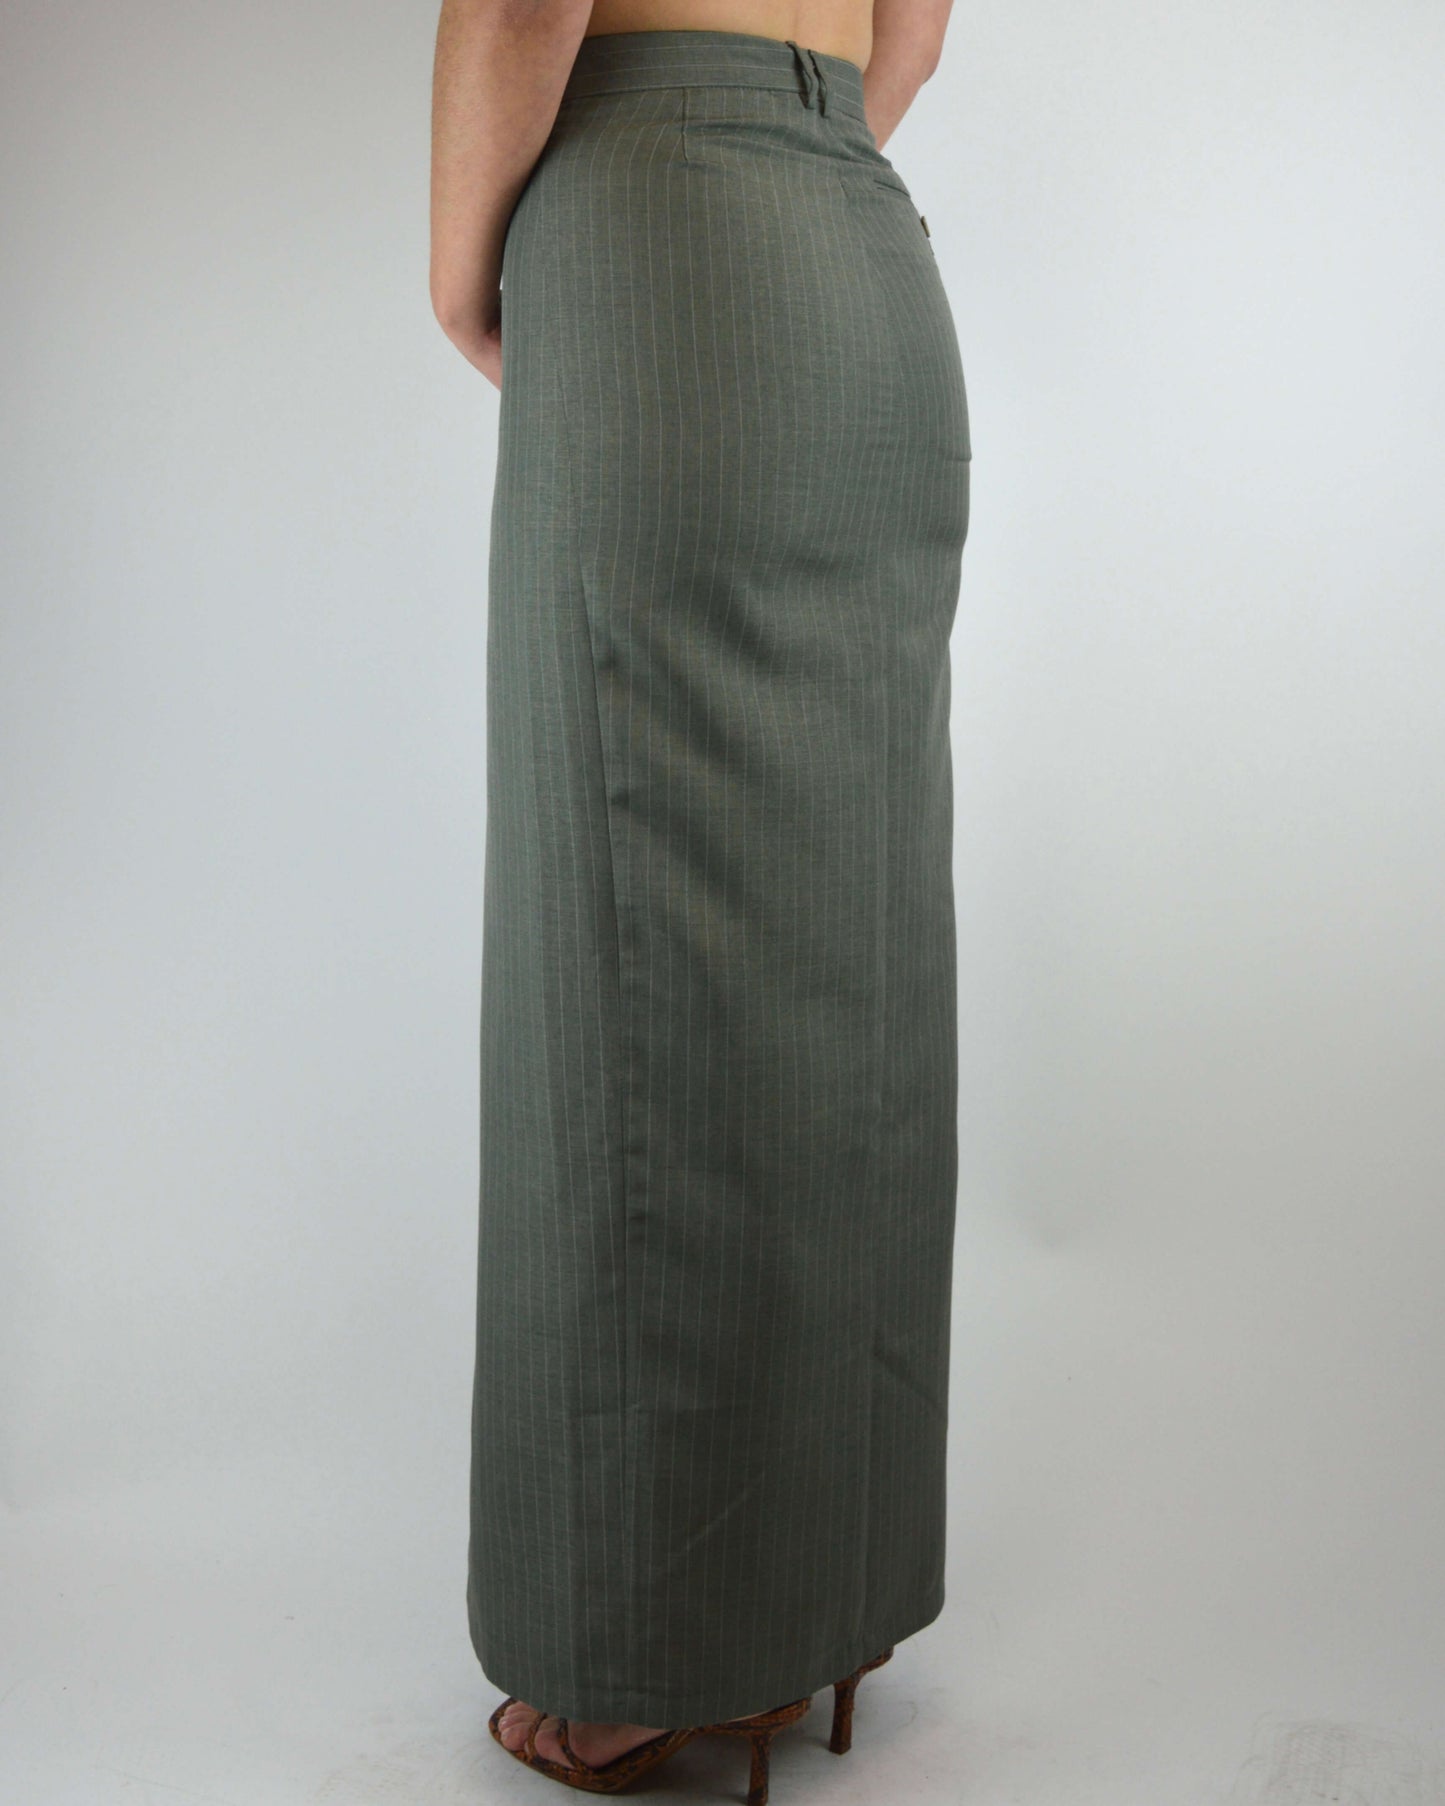 Vegan Skirt Suit - Green (XS/S)